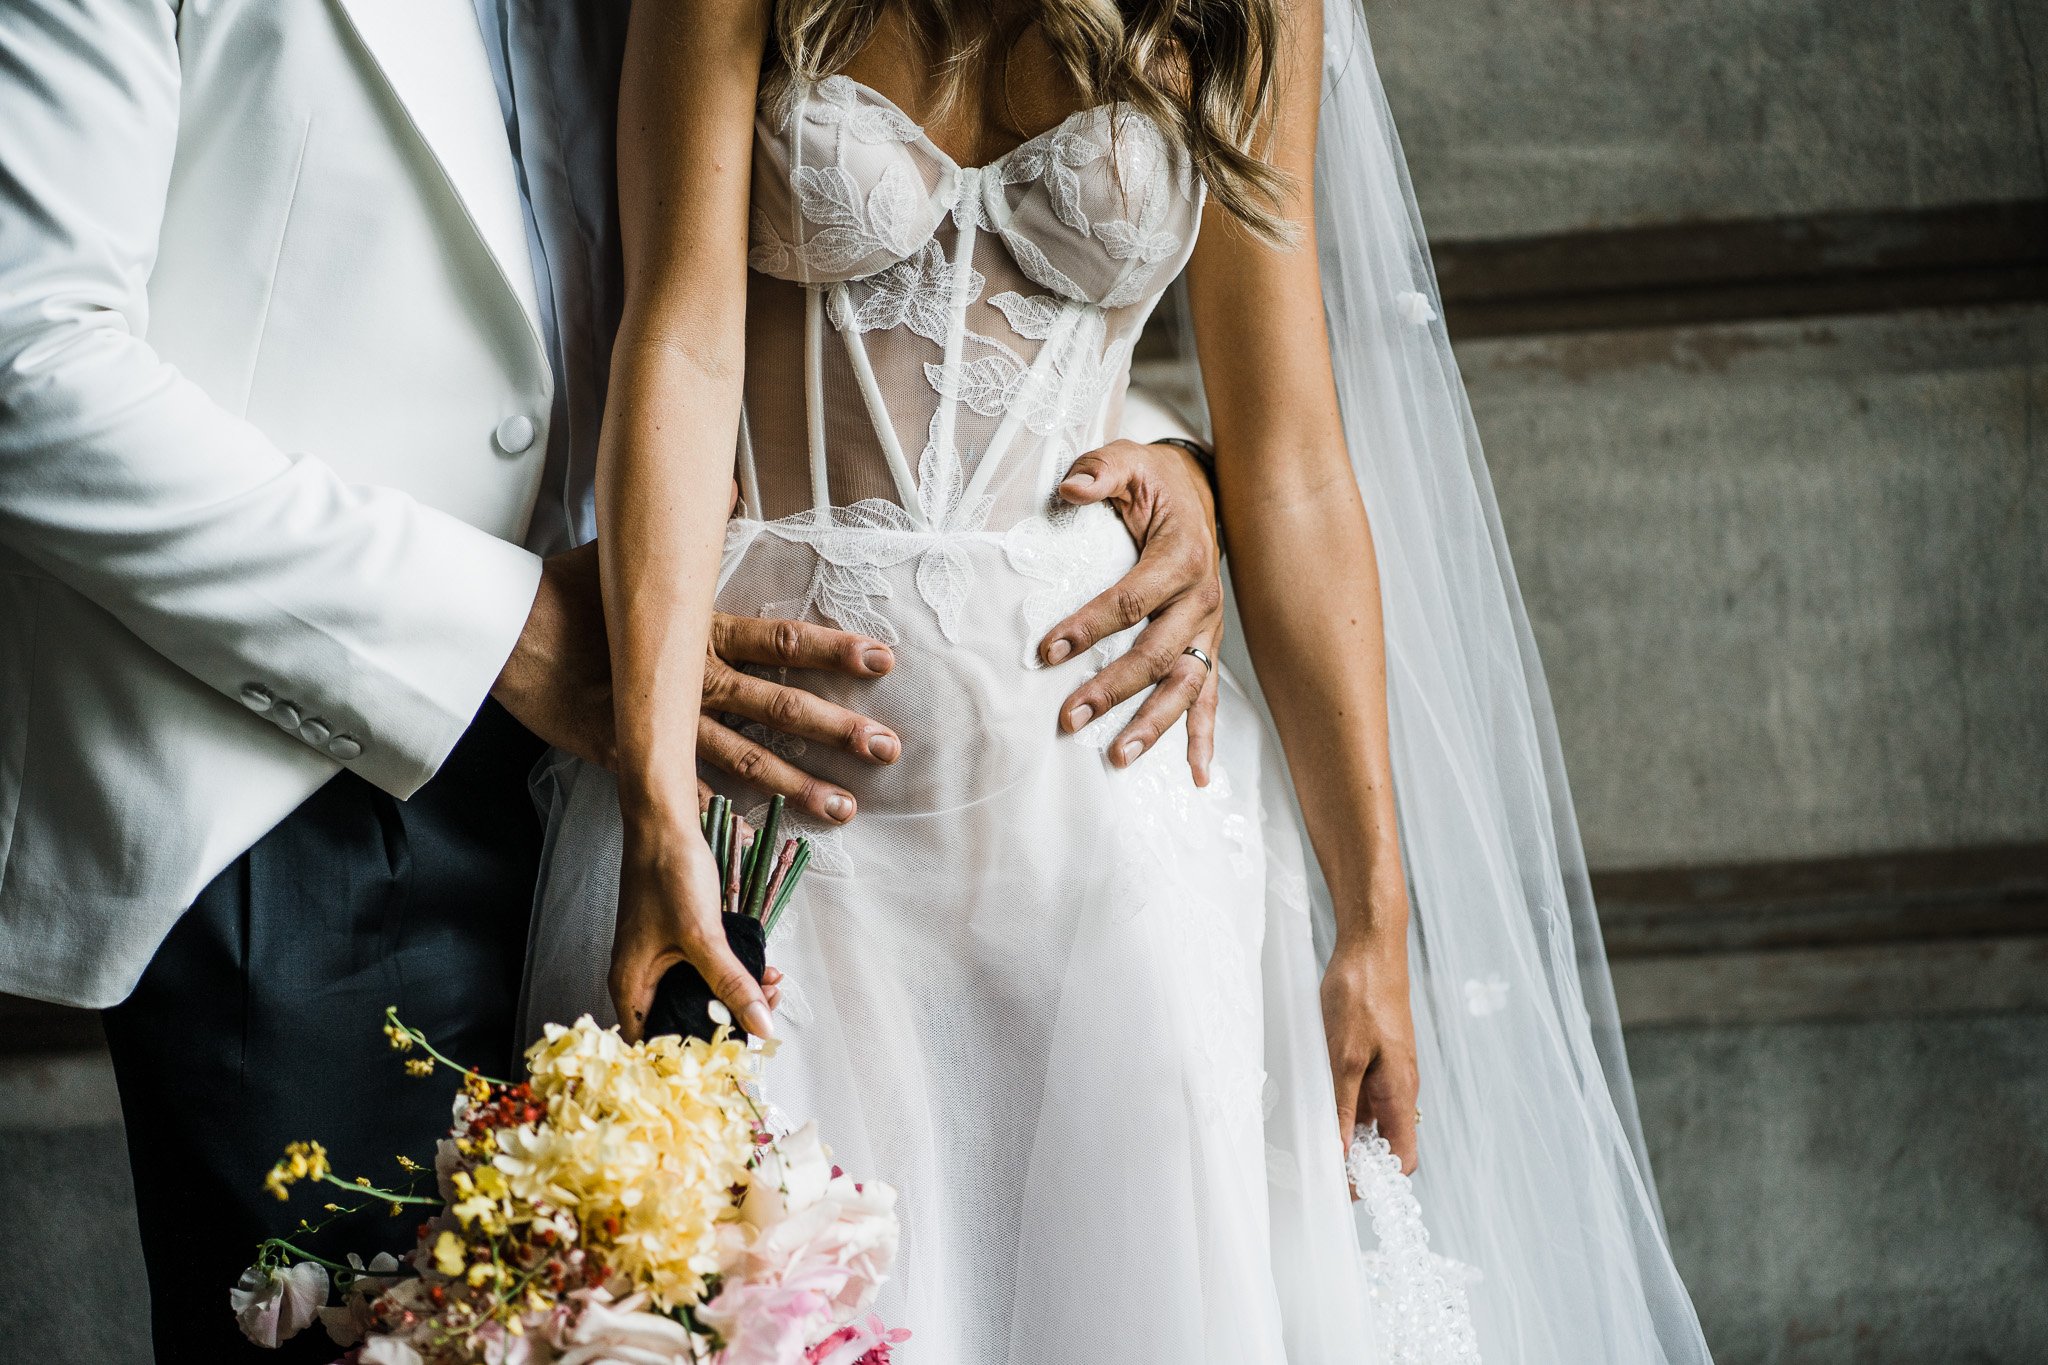  bride wearing modern wedding dress and groom wearing white suit 